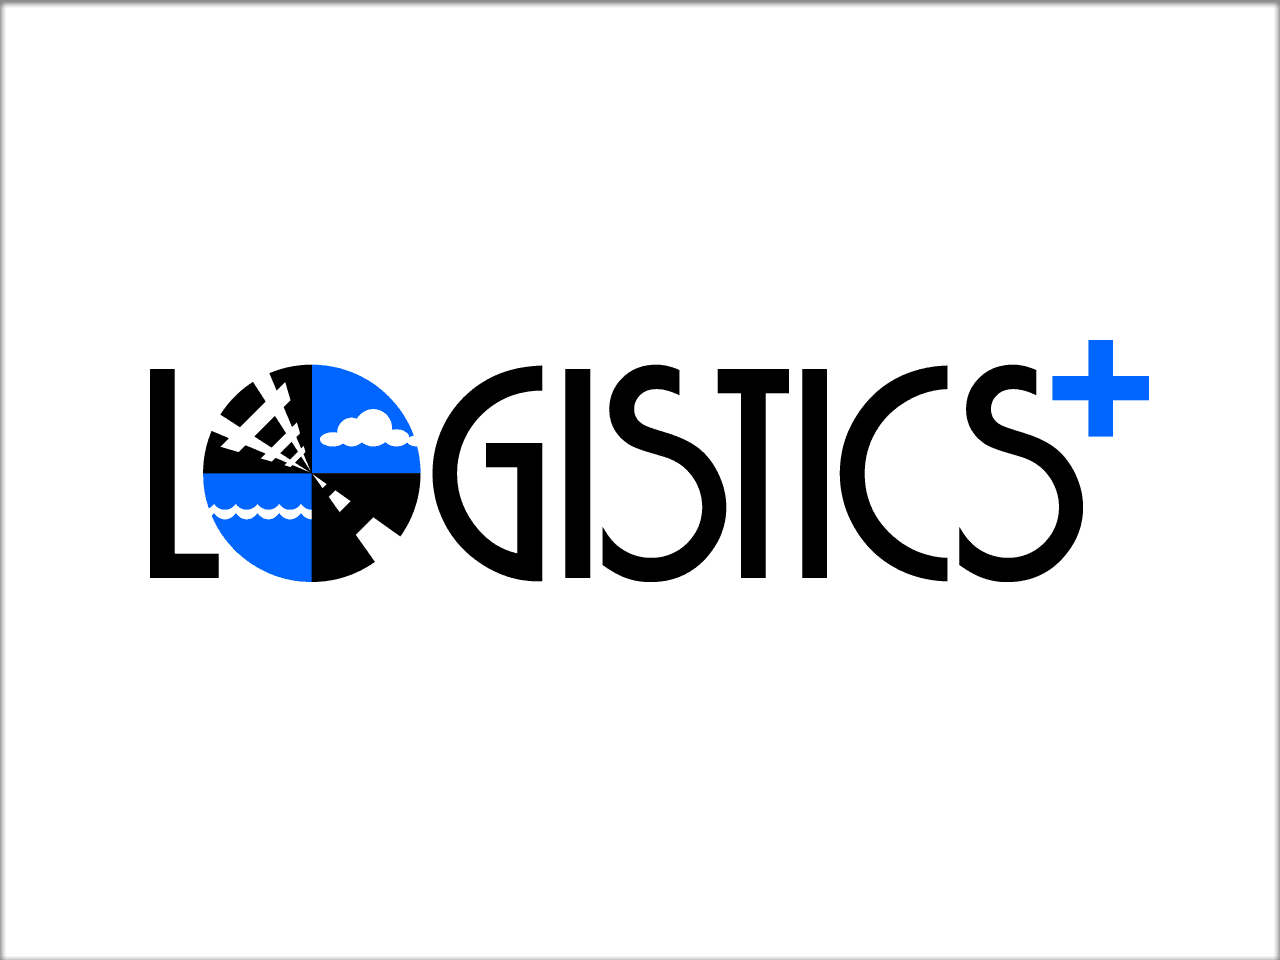 Logistics+ logo